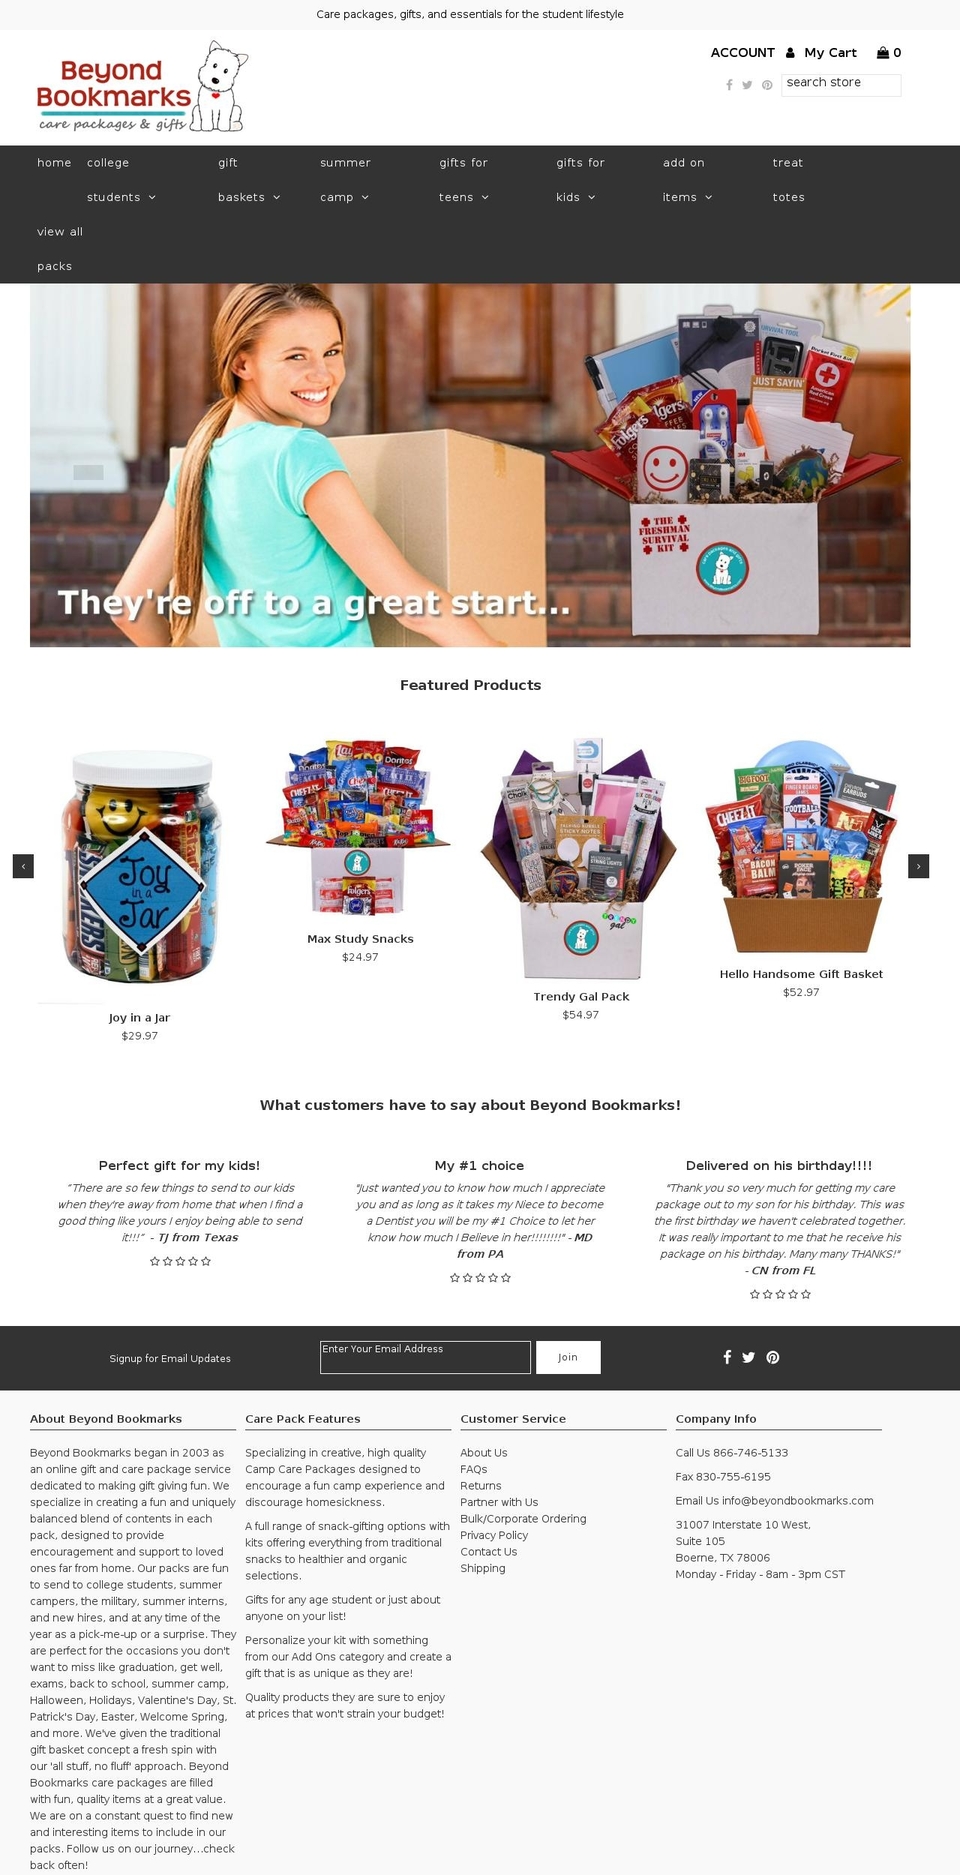 beyondbookmarks.com shopify website screenshot